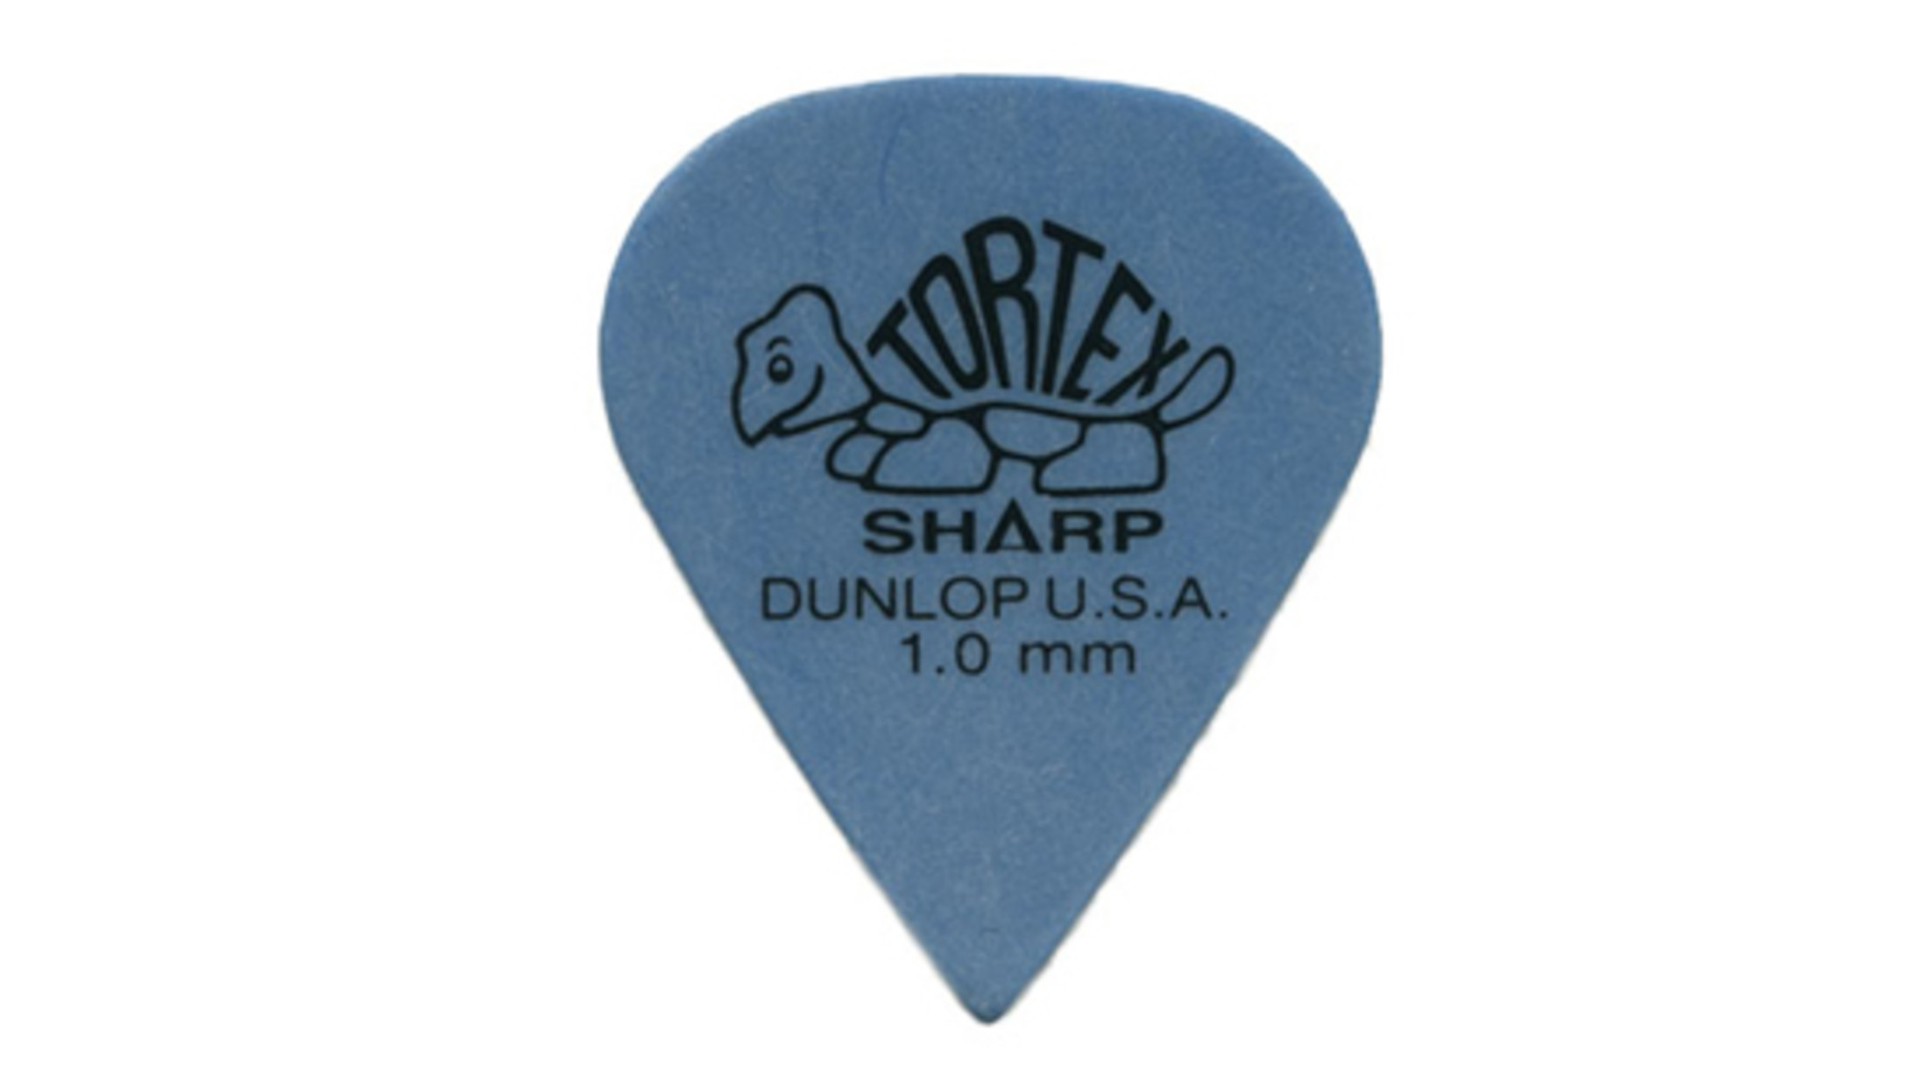 Медиатор вправе. Медиатор Dunlop Sharp 1mm. Медиаторы Dunlop 418r1.14 Tortex Plectra 1.14 mm. Медиаторы тортекс Шарп. Медиатор Dunlop 433r1.40 Ultex Sharp 1.4 mm.